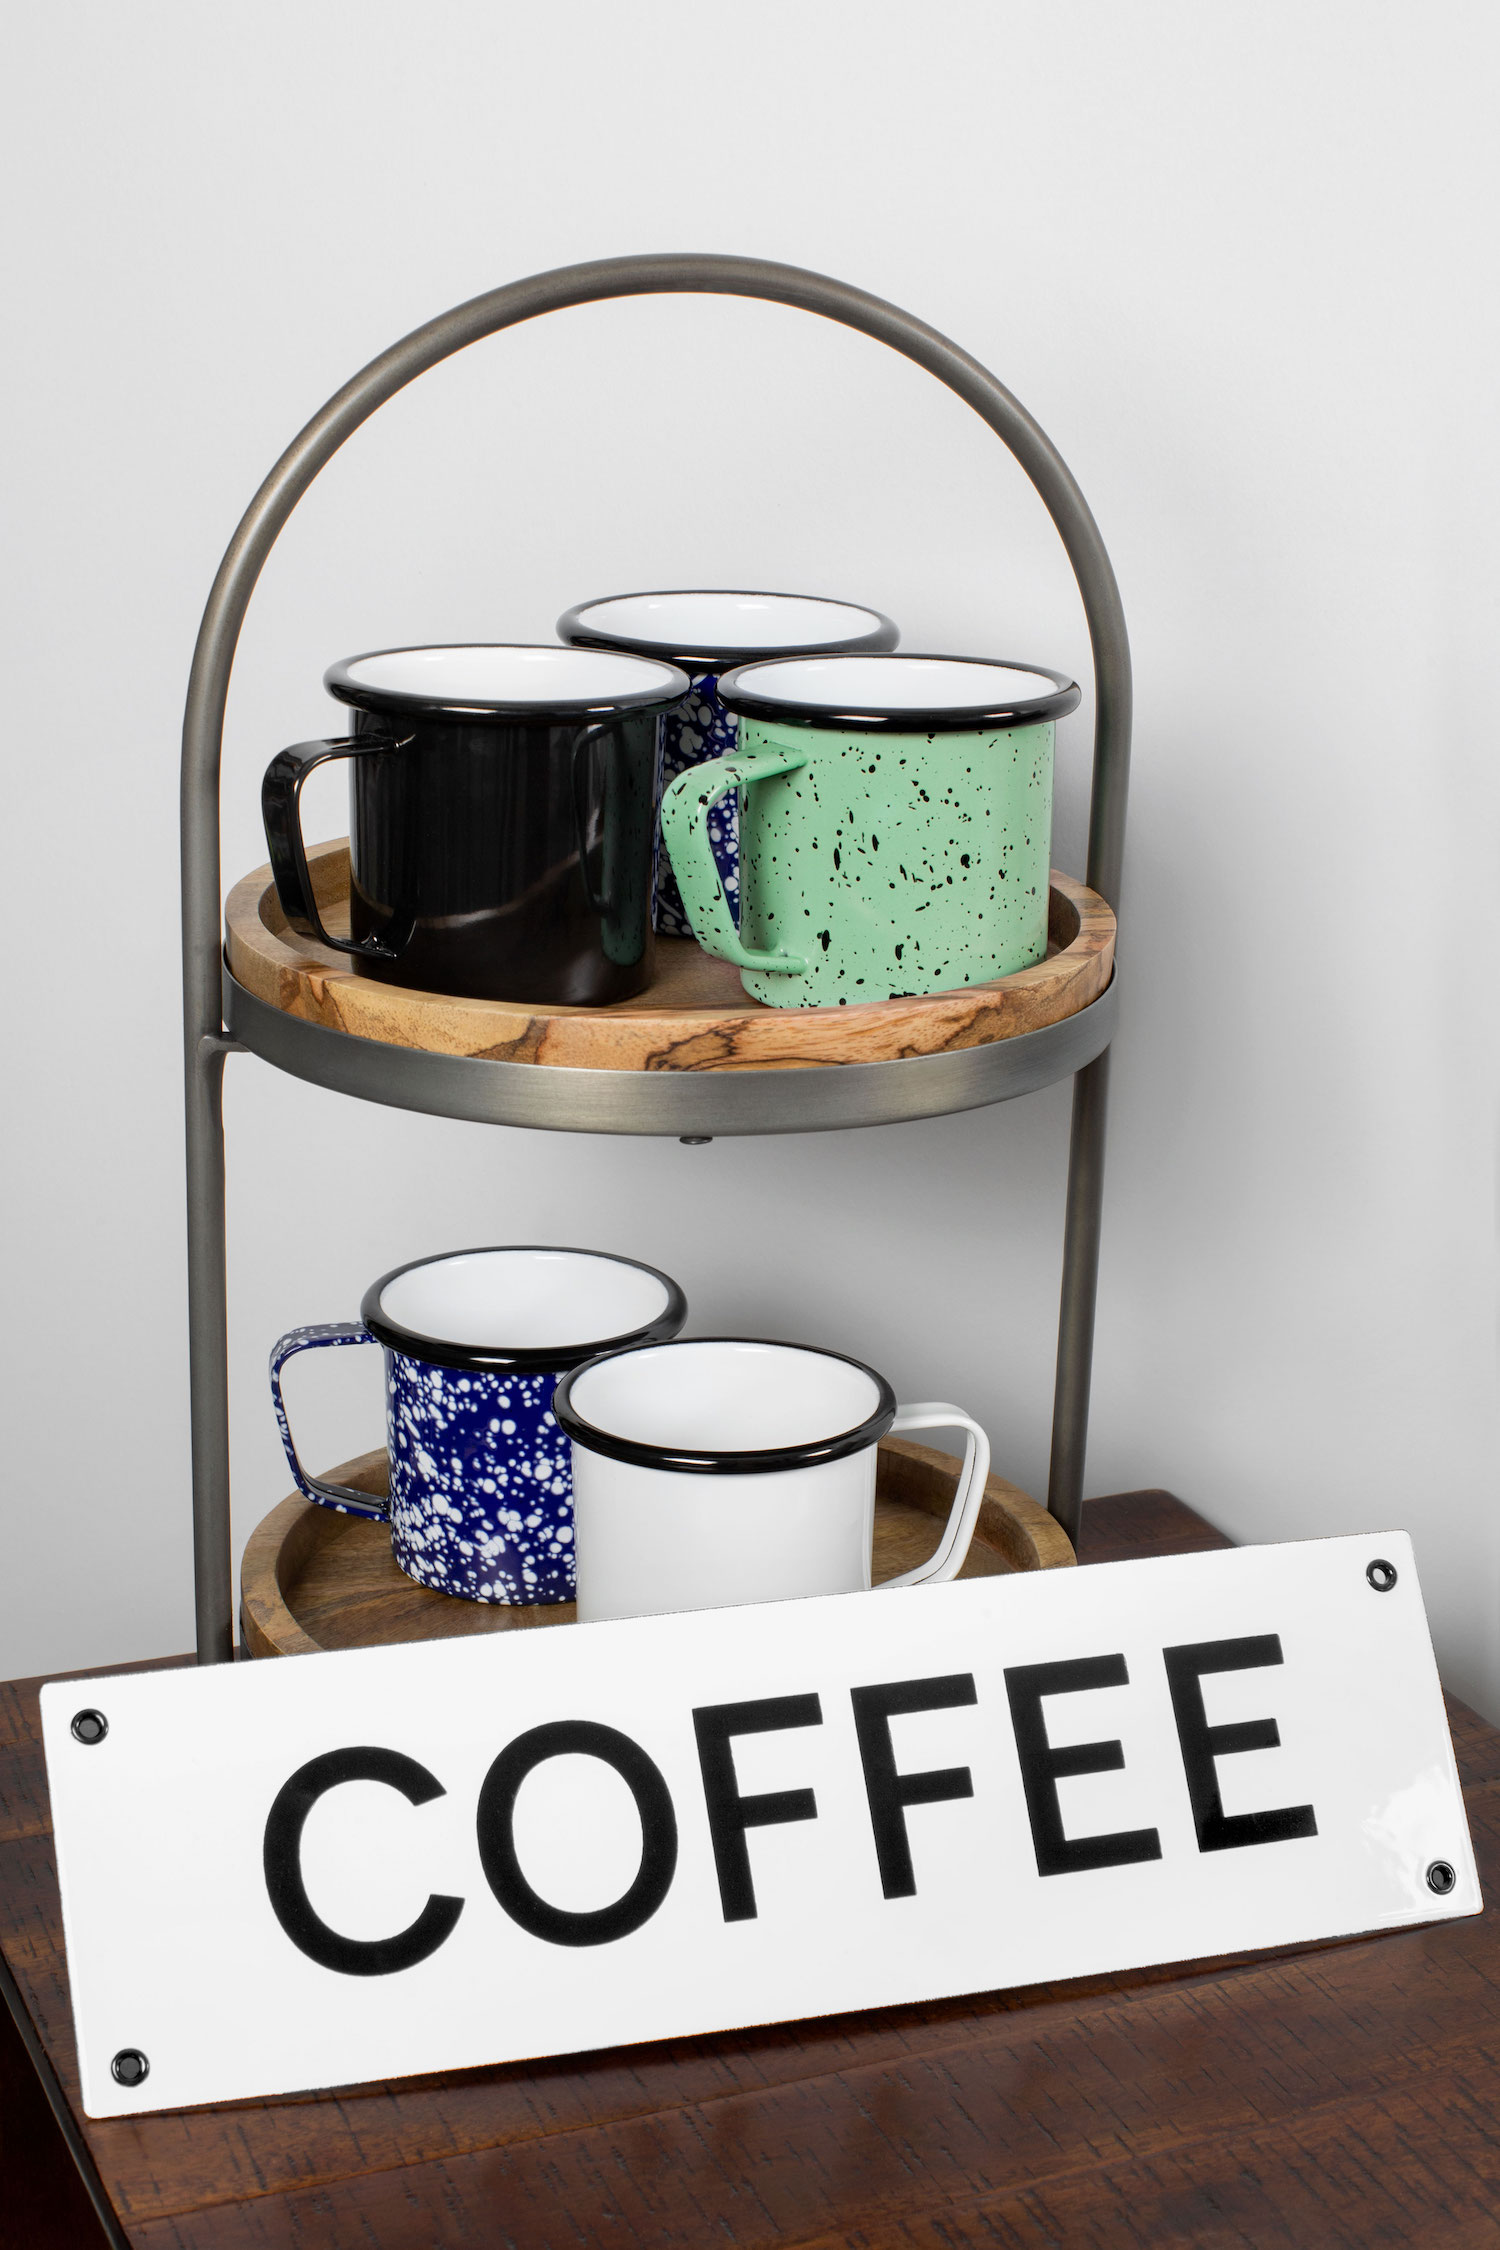 https://cdn.barnlight.com/images/detailed/51/8oz-Coffee-Cups-Insetting-1-multi.jpg